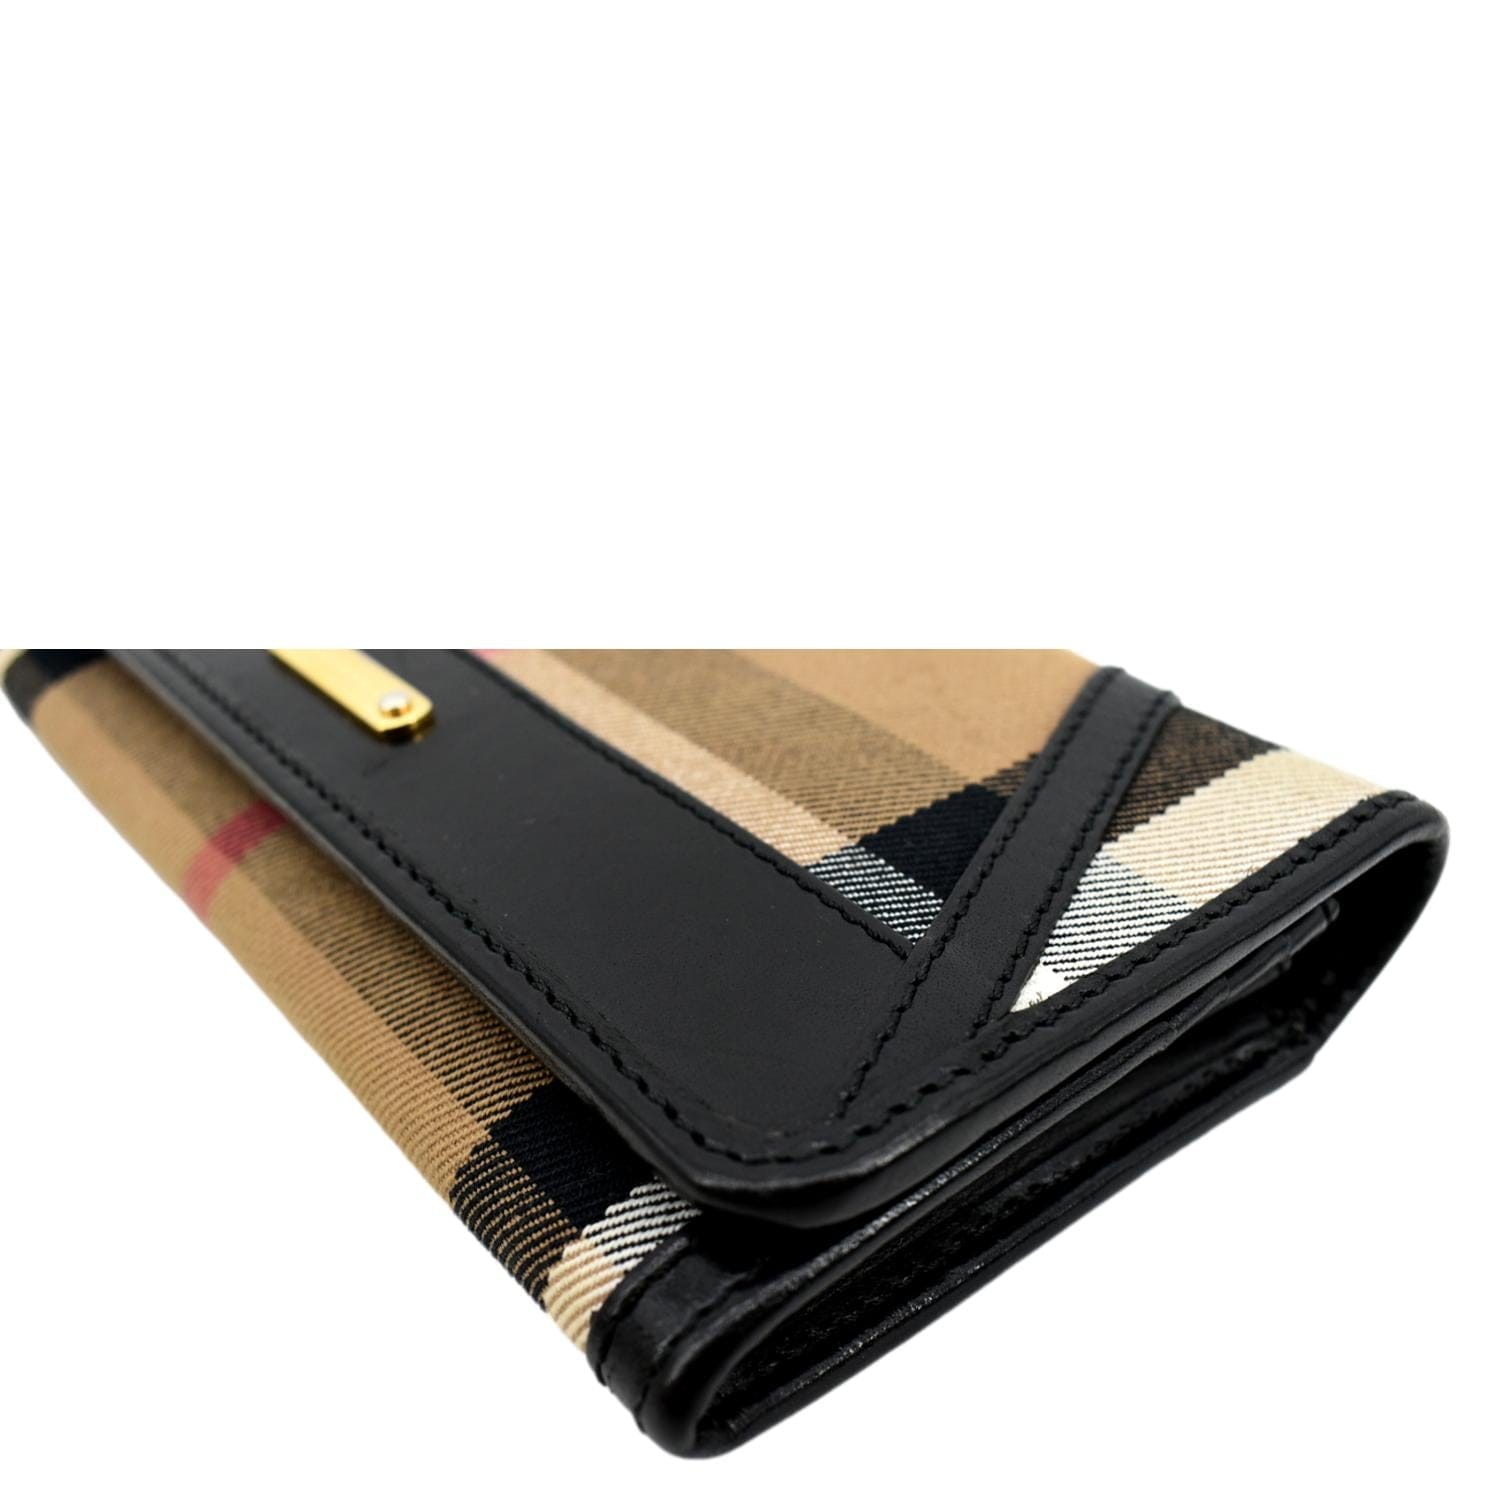 Burberry Novacheck Long Wallet  Long wallet, Clothes design, Burberry